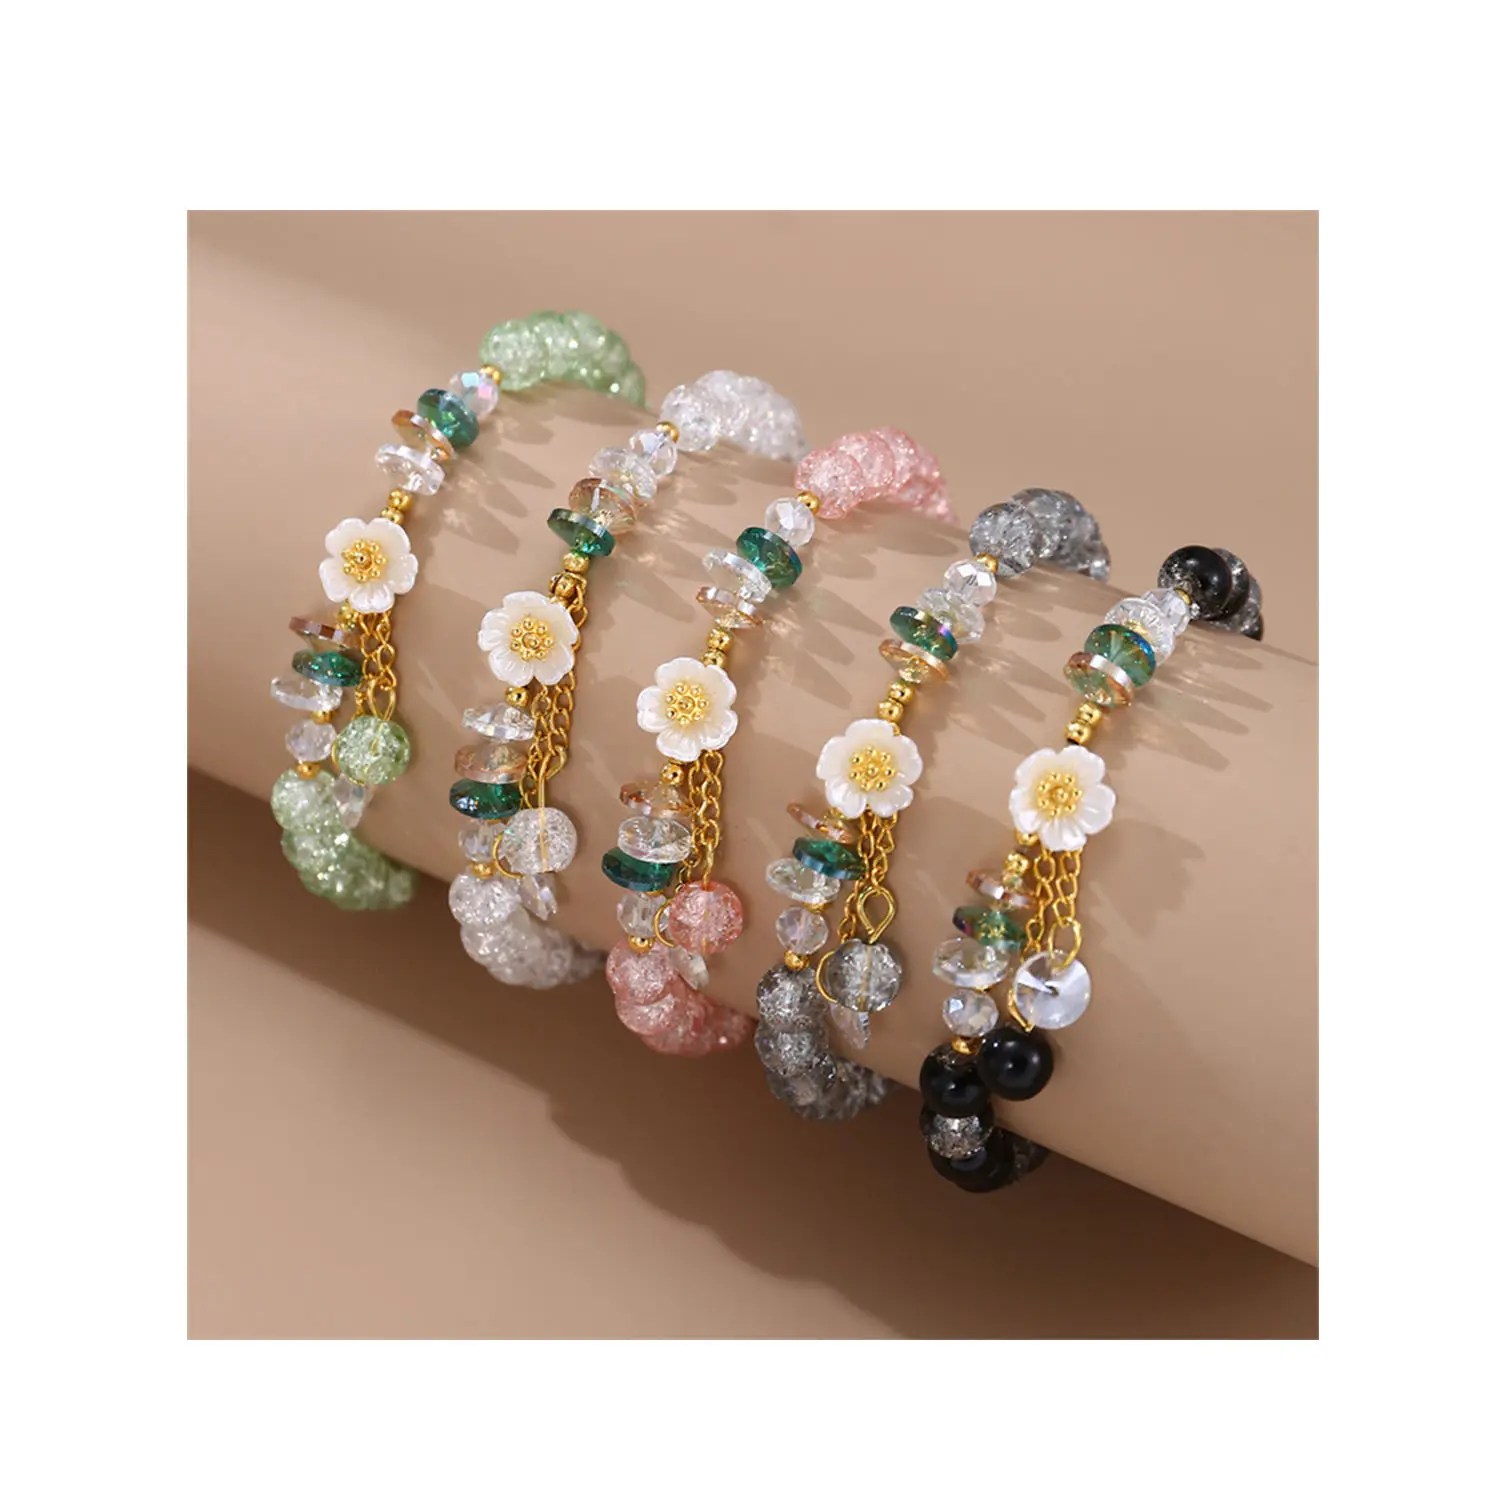 Pulseira de contas de vidro com estampa floral elegante estilo coreano japonês para mulheres